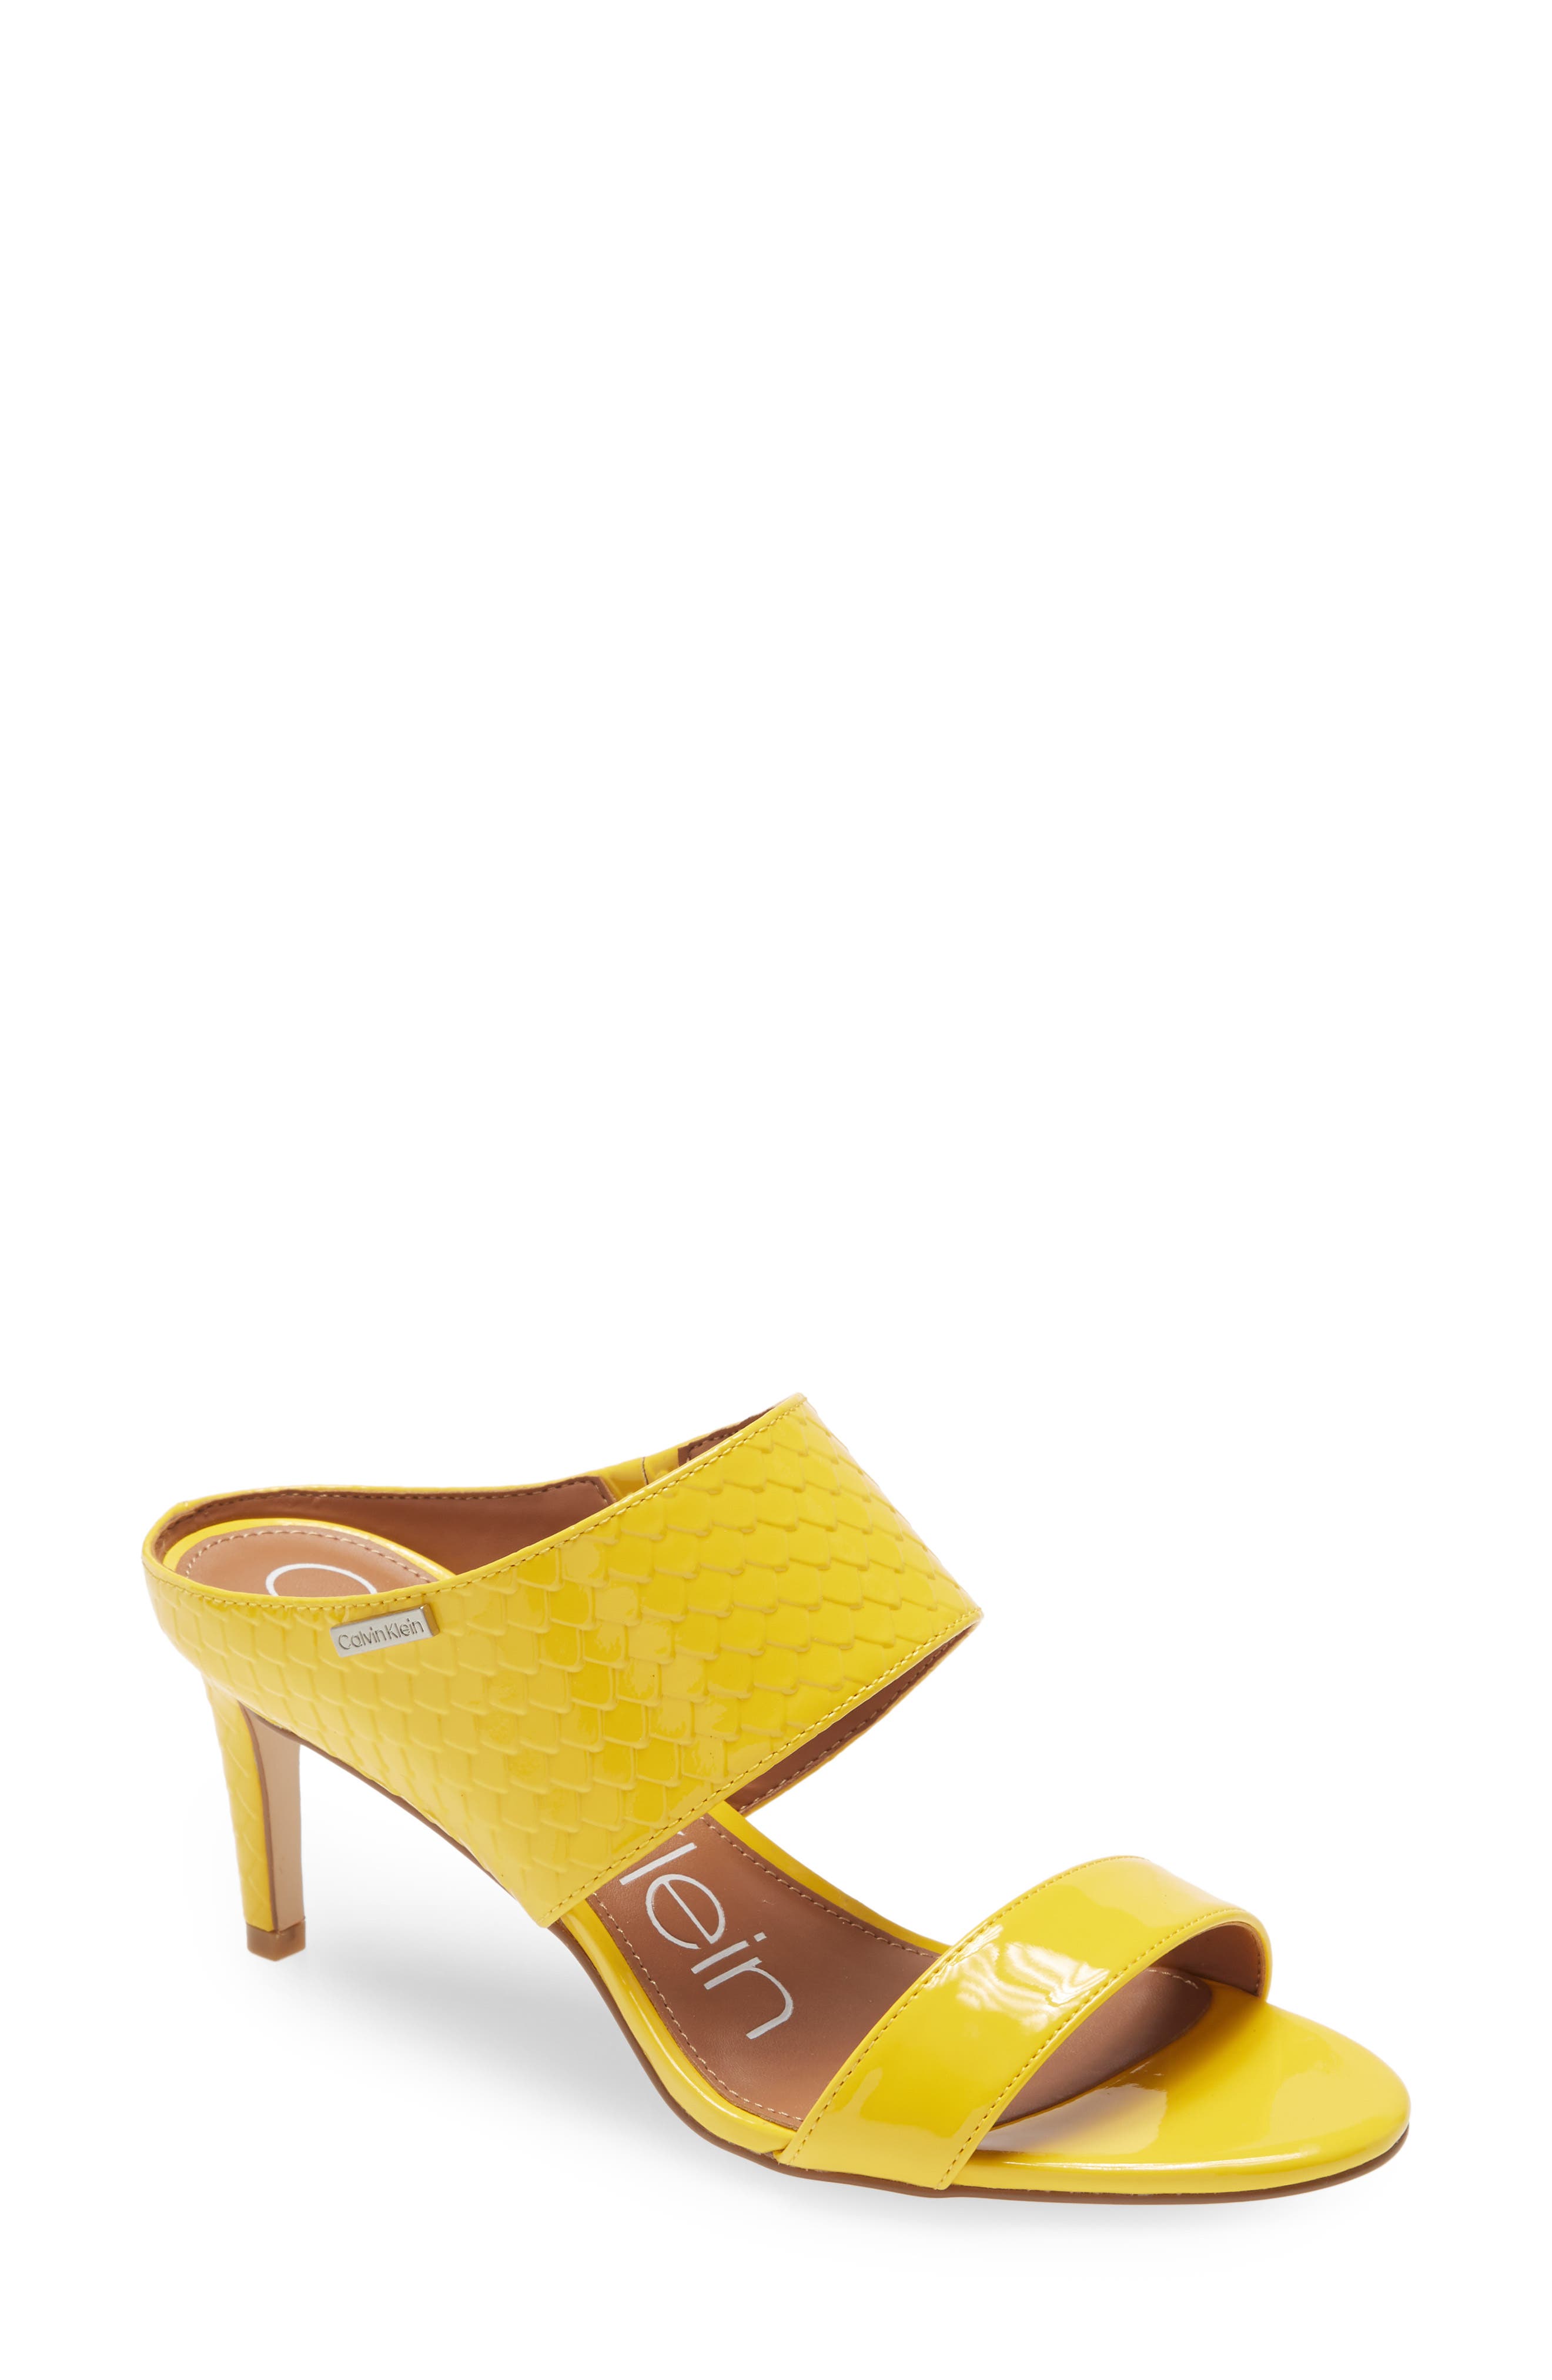 highlighter yellow heels